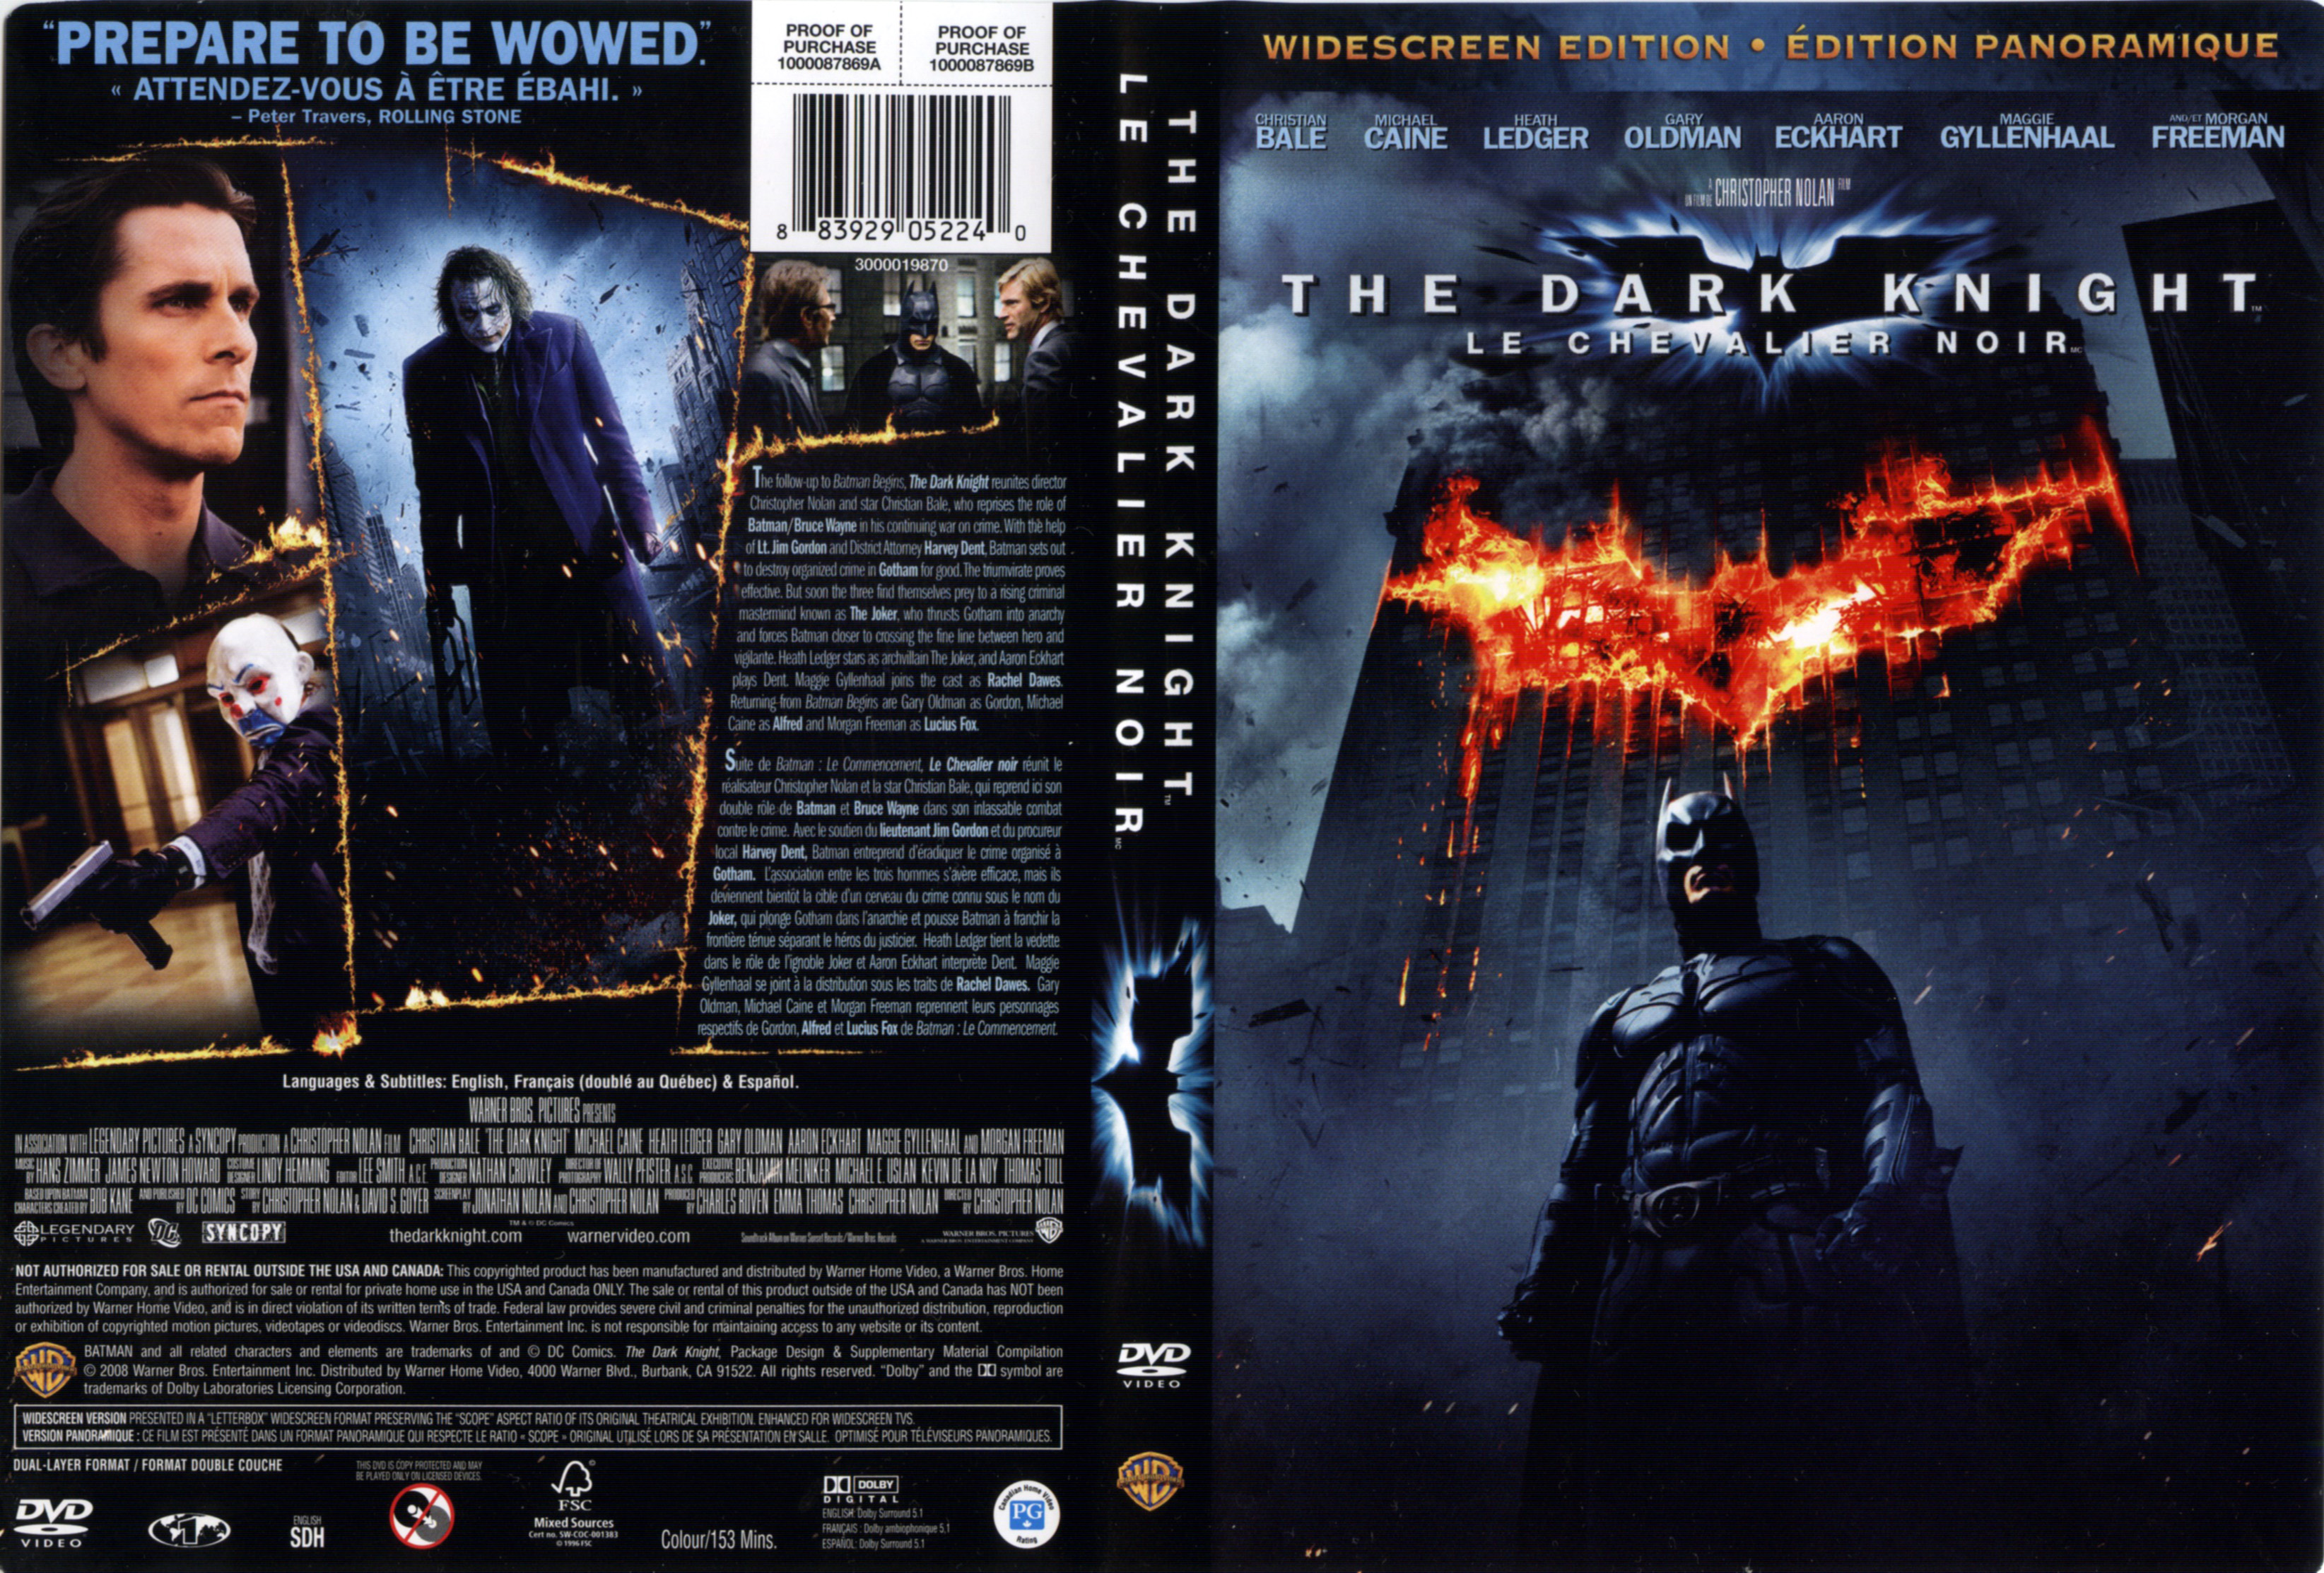 Jaquette DVD Batman the dark knight Zone 1